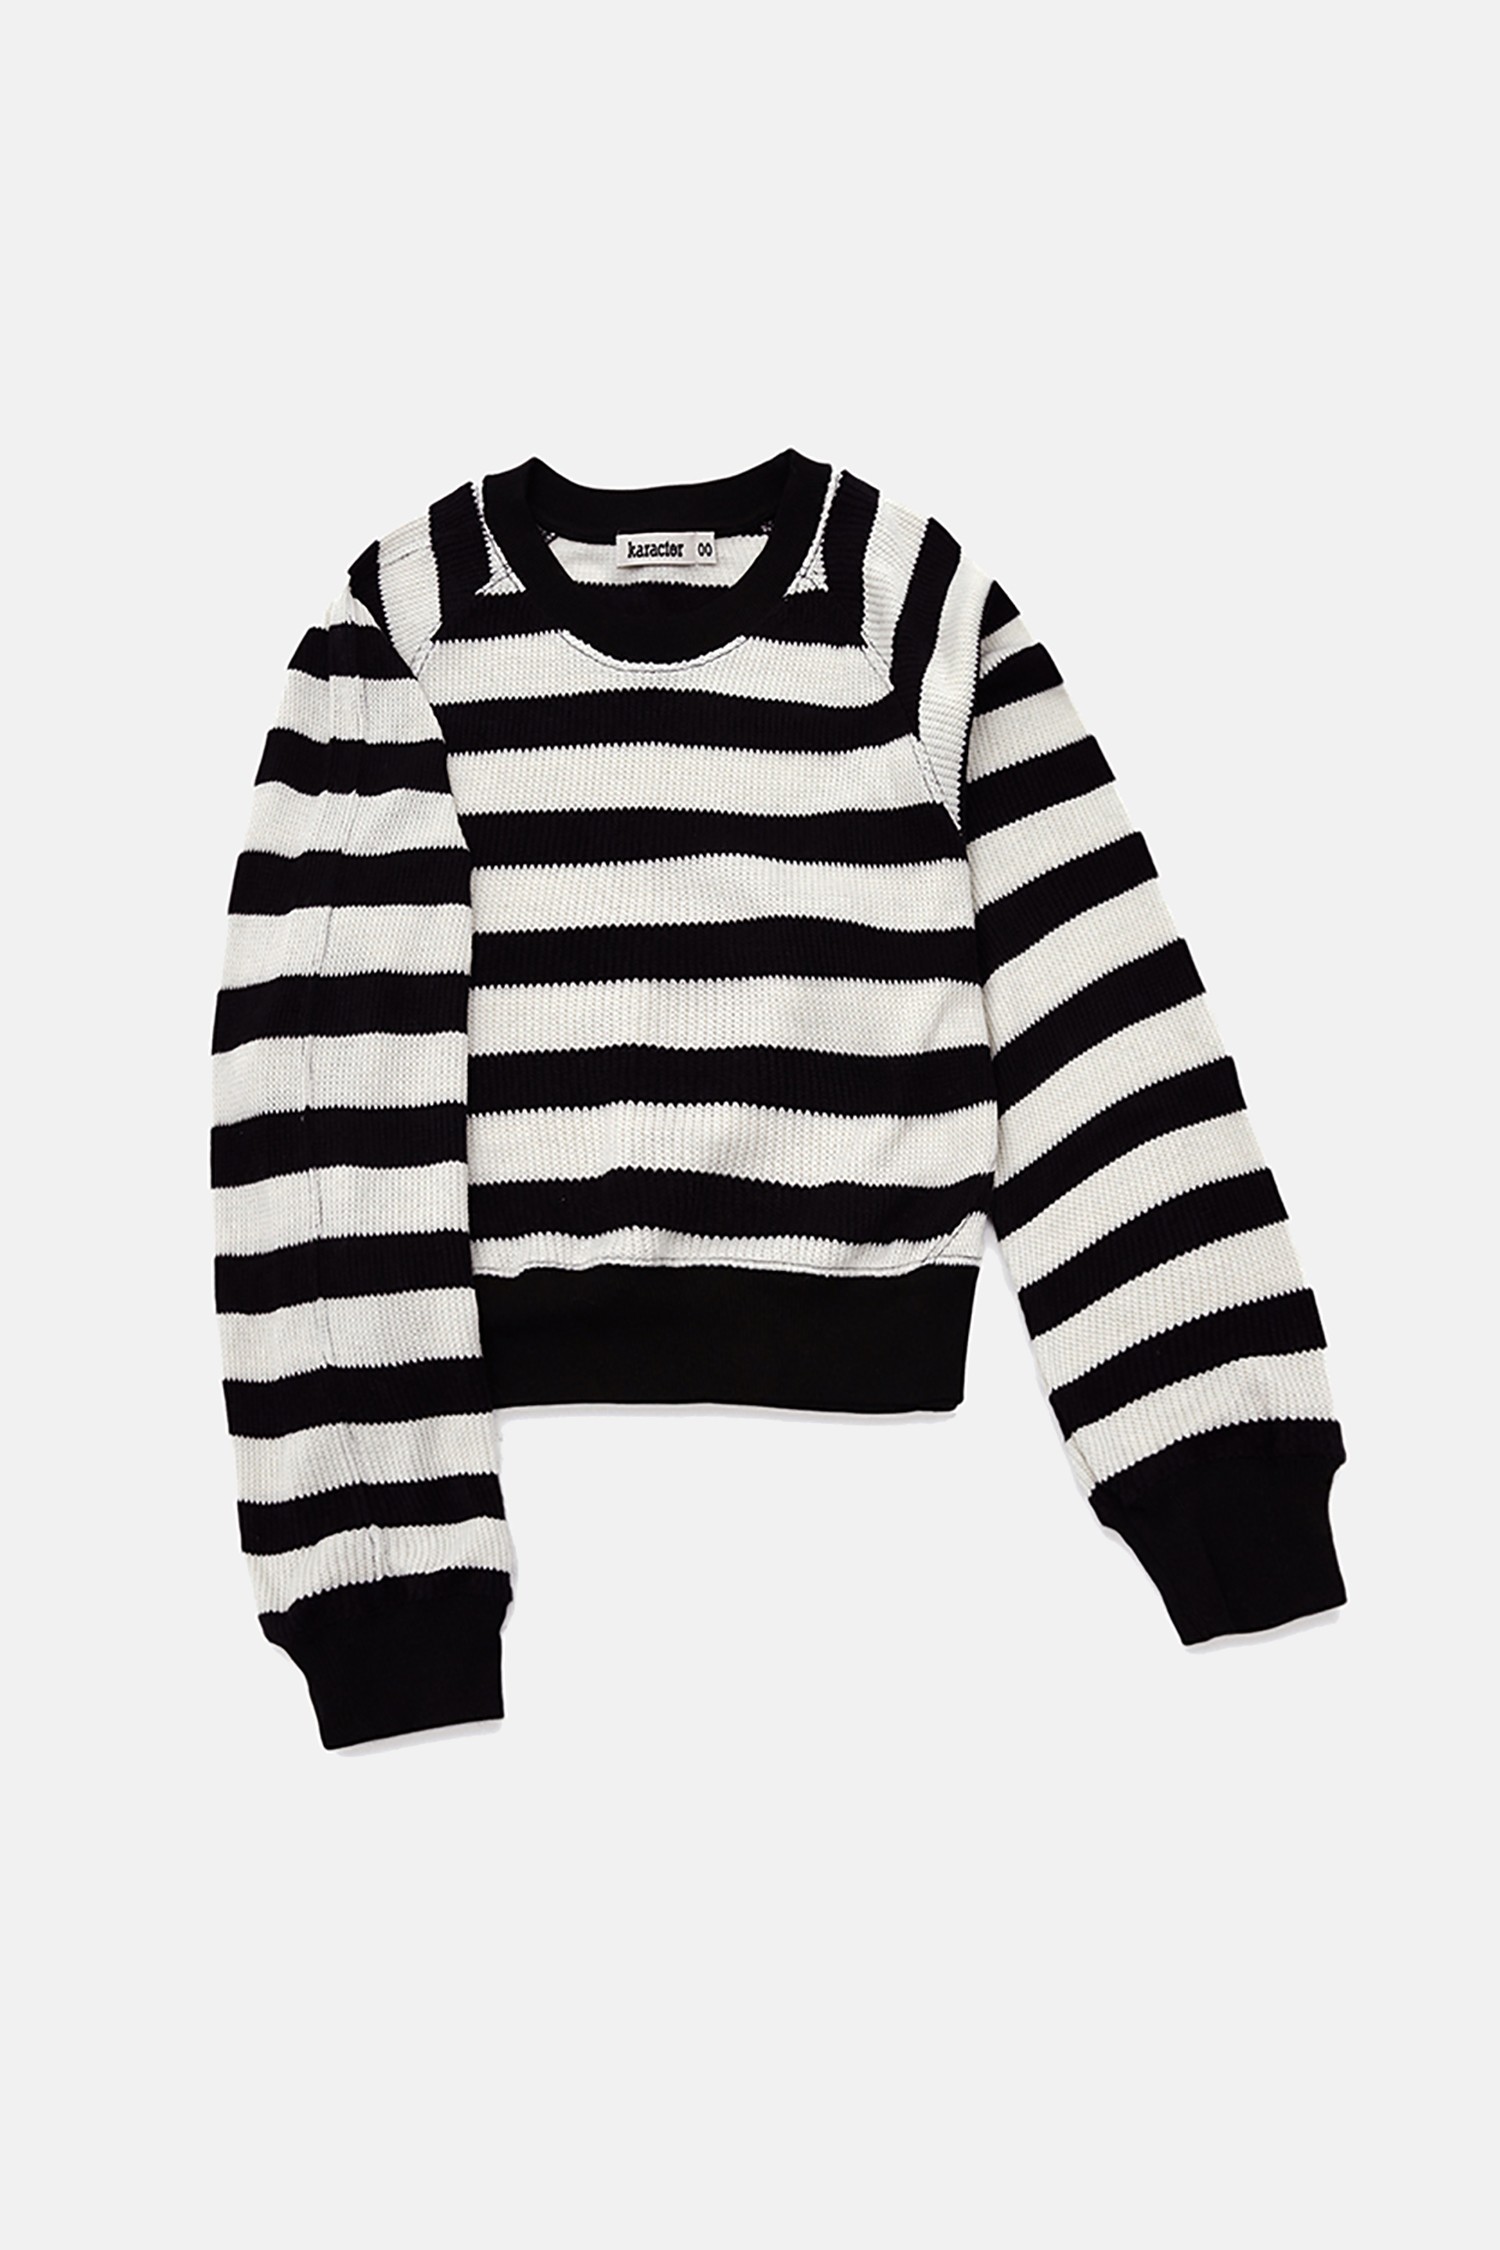 W)Mingle striped knit / Black ivory_KARACTOR